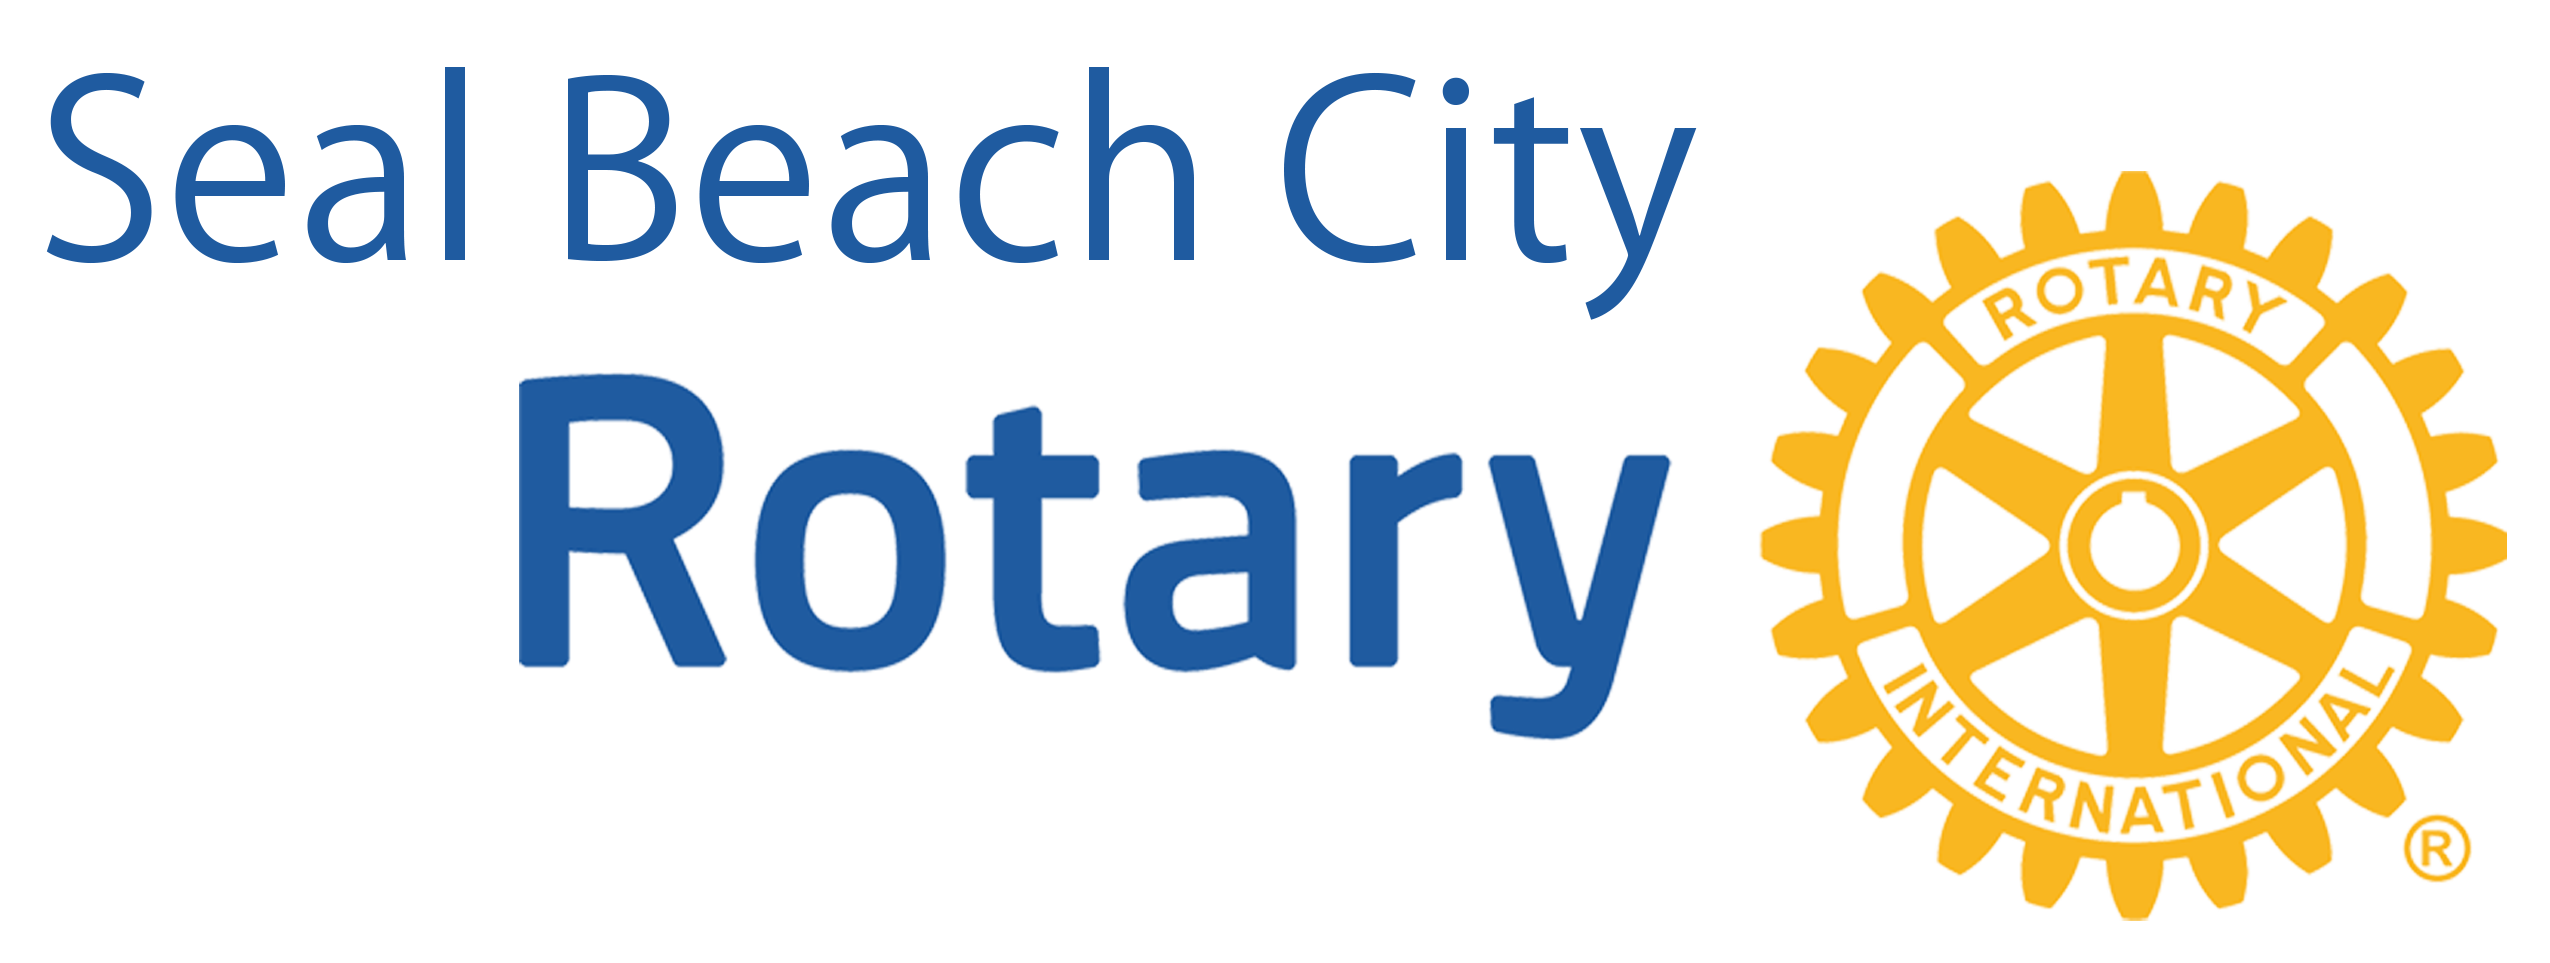 Seal Beach City Rotary